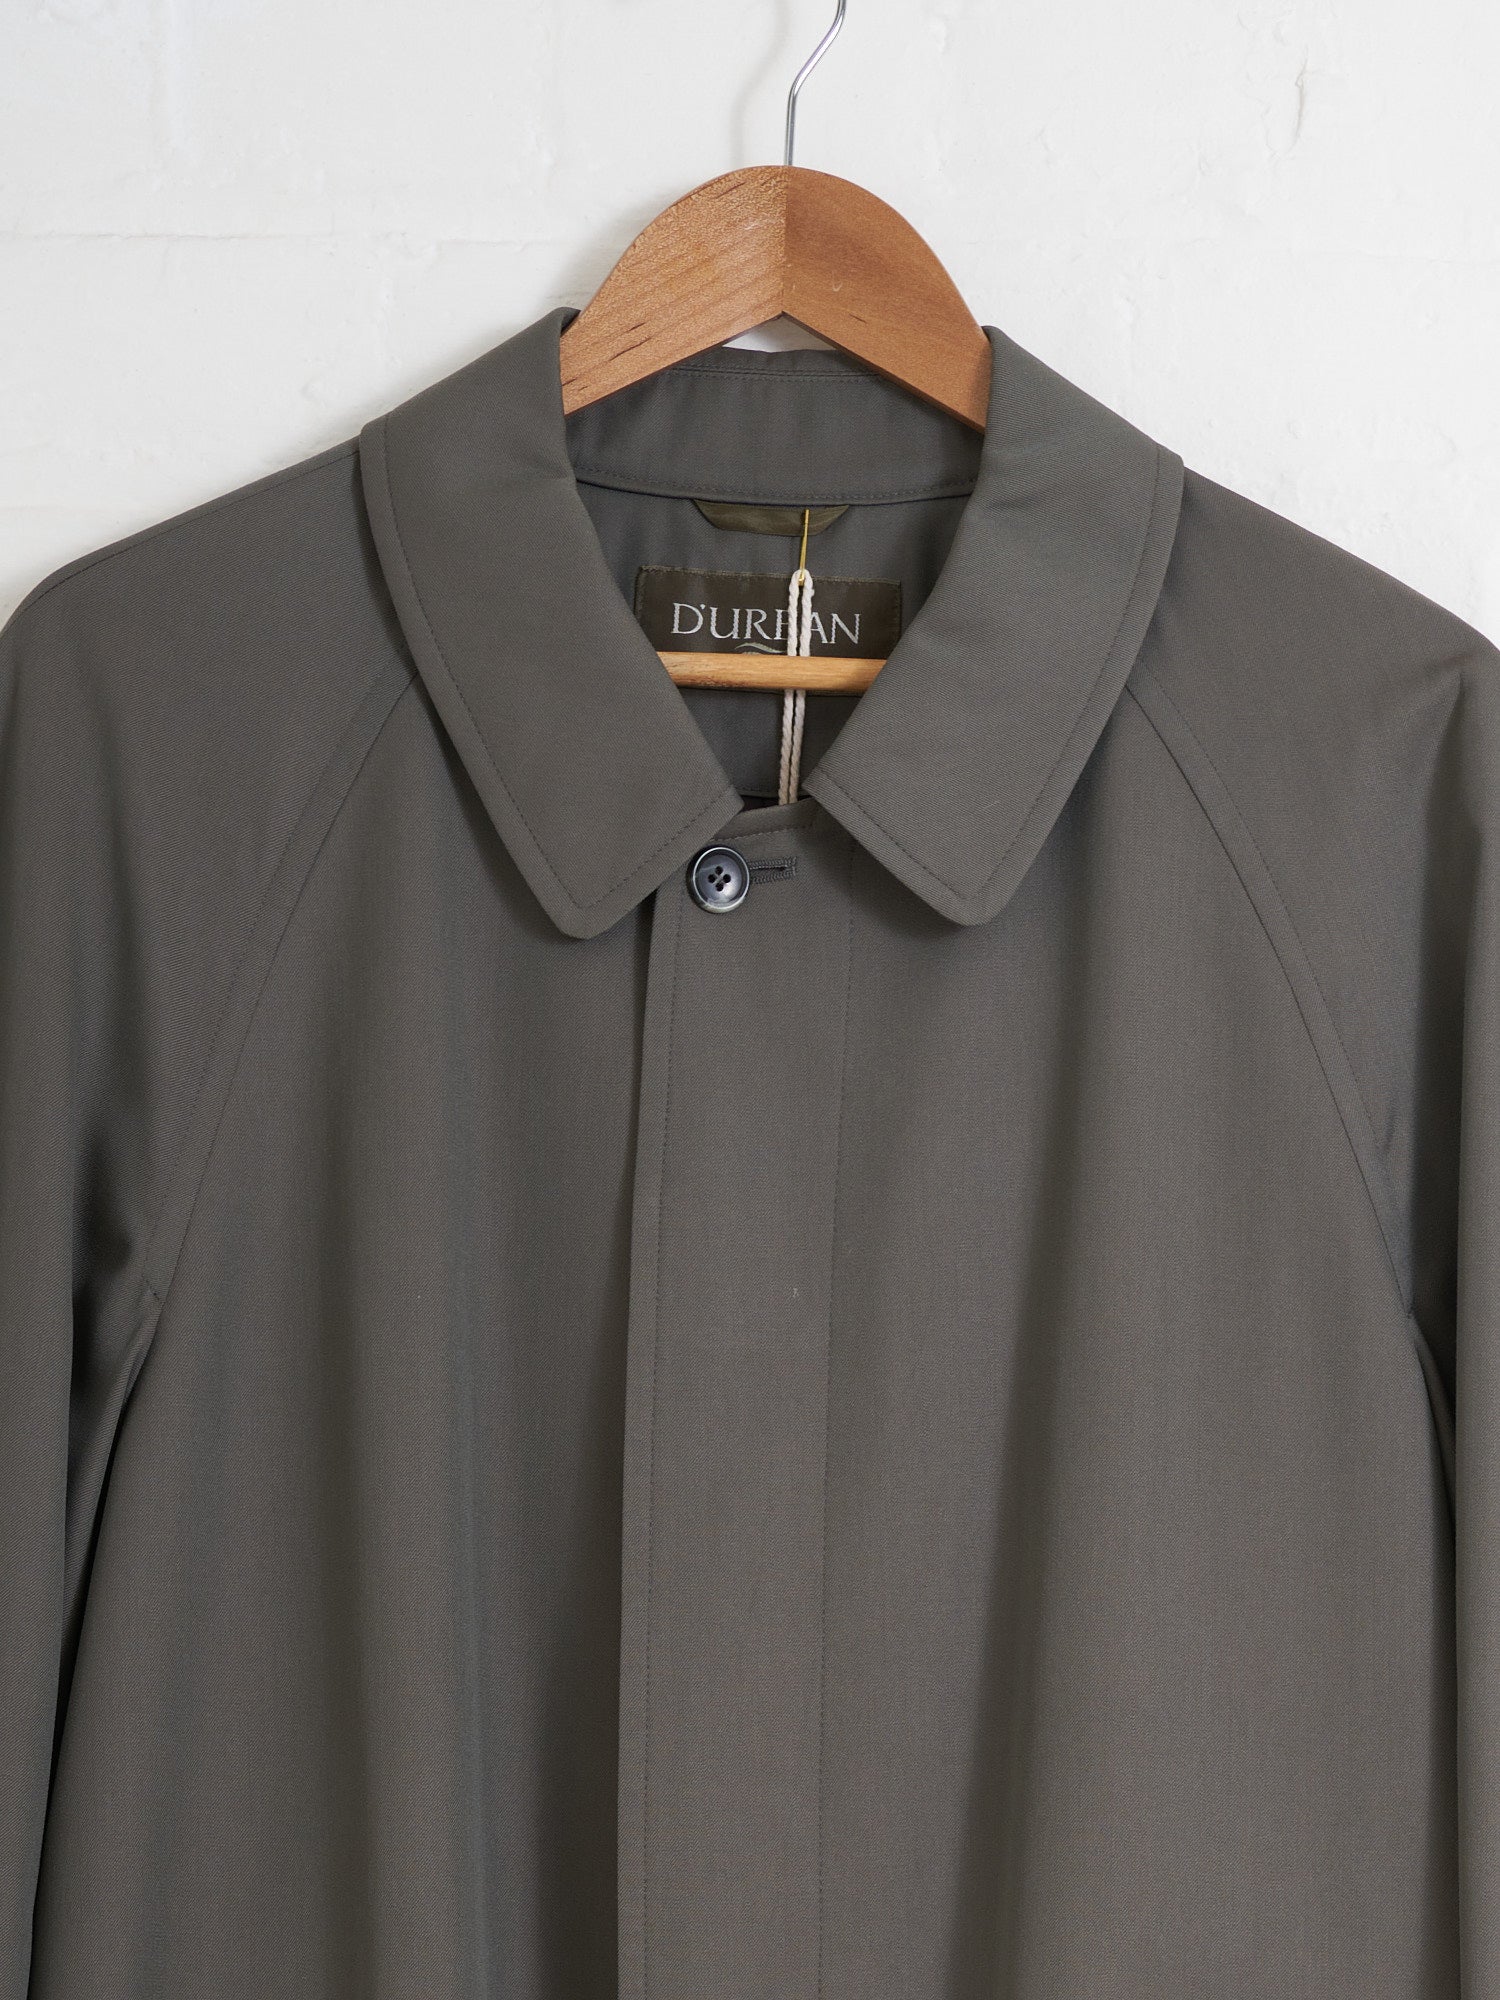 D'URBAN khaki grey wool silk covered placket mackintosh coat - S M L